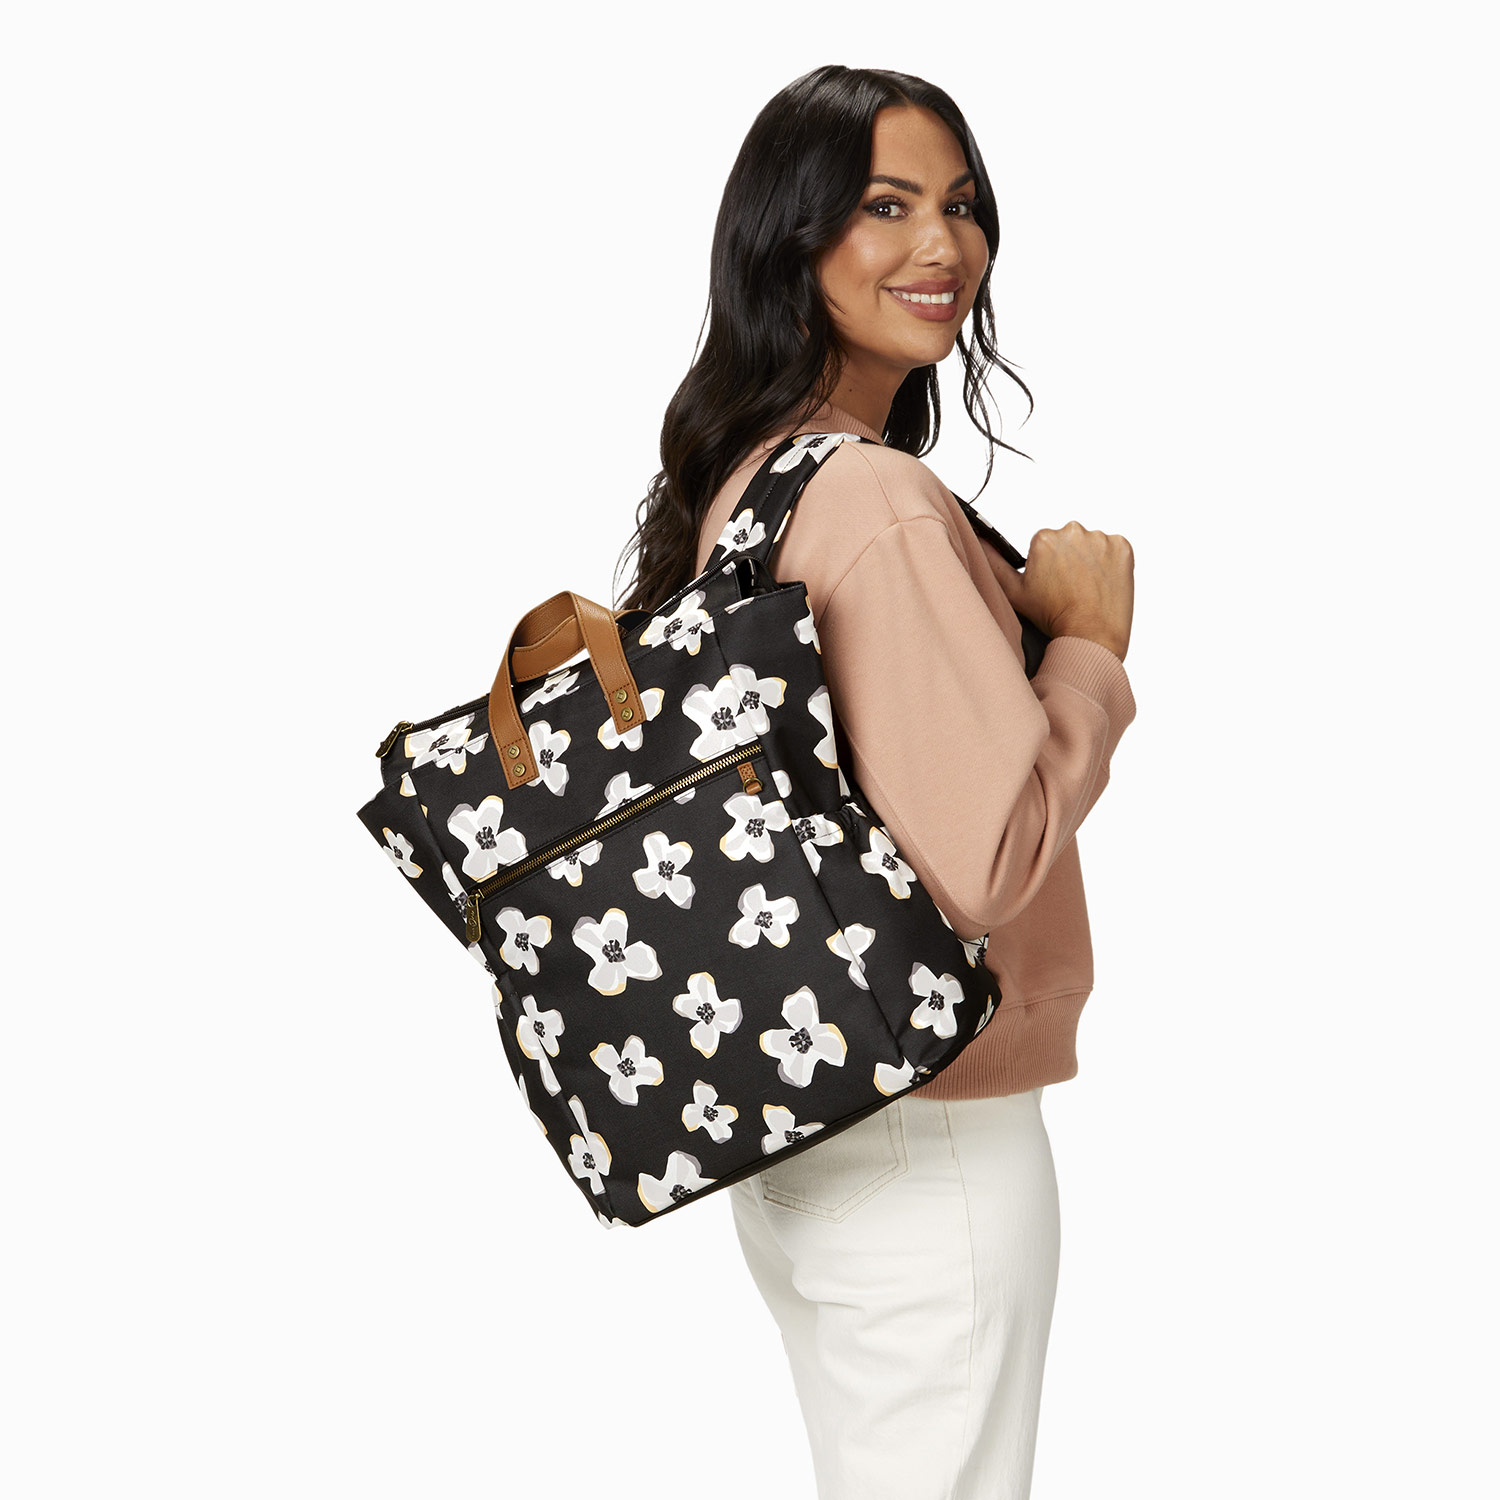 ThirtyOne Sling Backpack | Sling backpack, Backpacks, Back bag